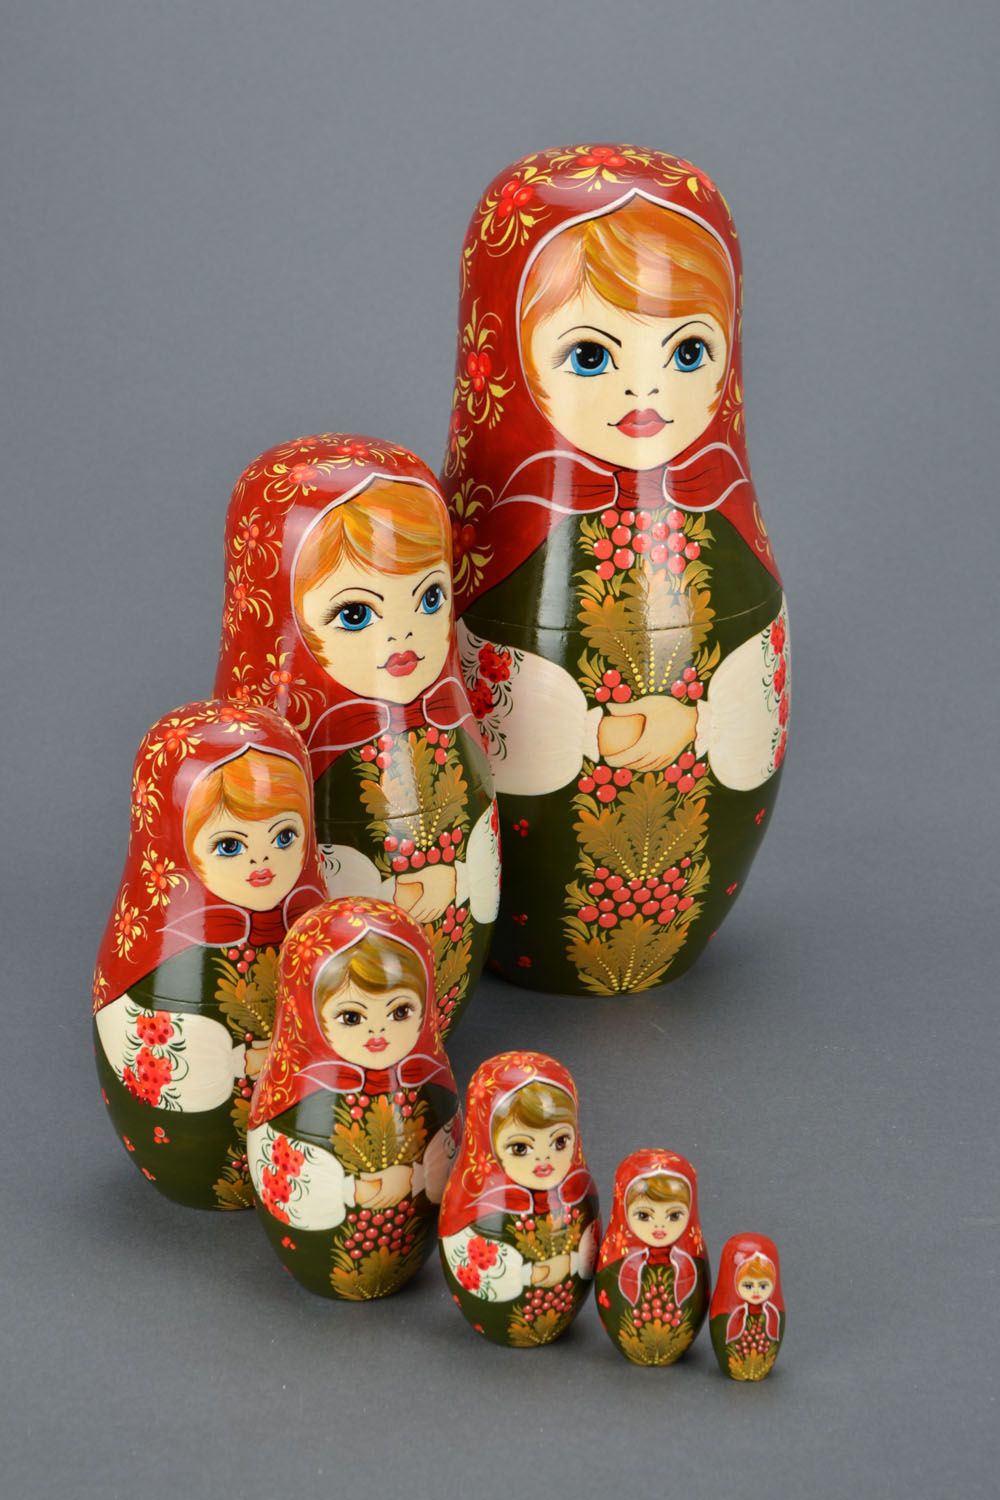 Muñeca rusa pintada al óleo foto 1